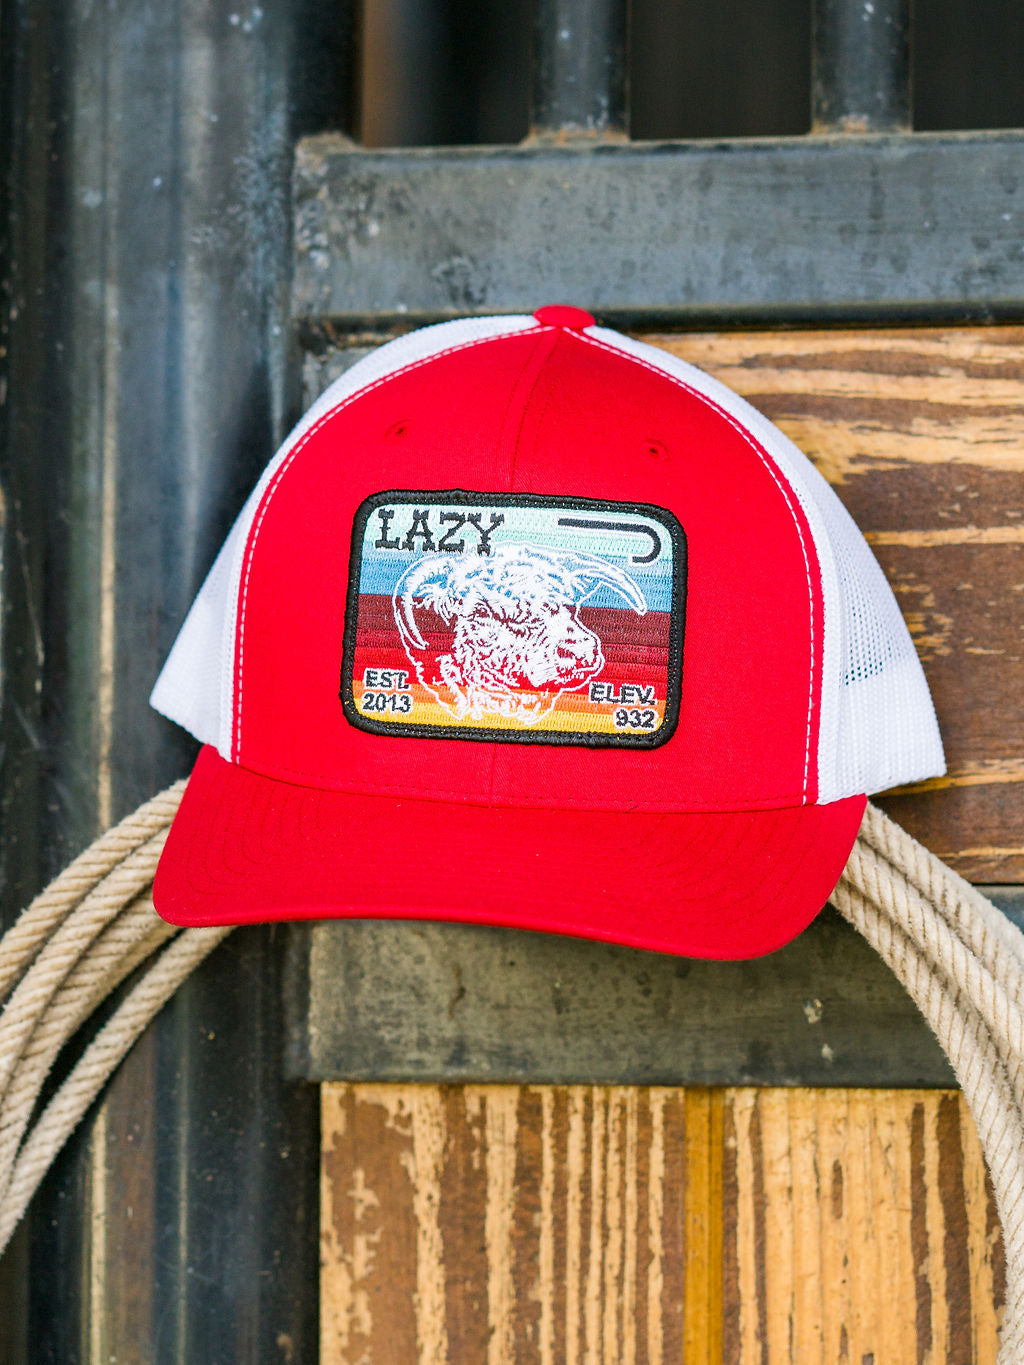 Lazy J Ranch Wear Red & White 3.5" Serape Elevation Cap